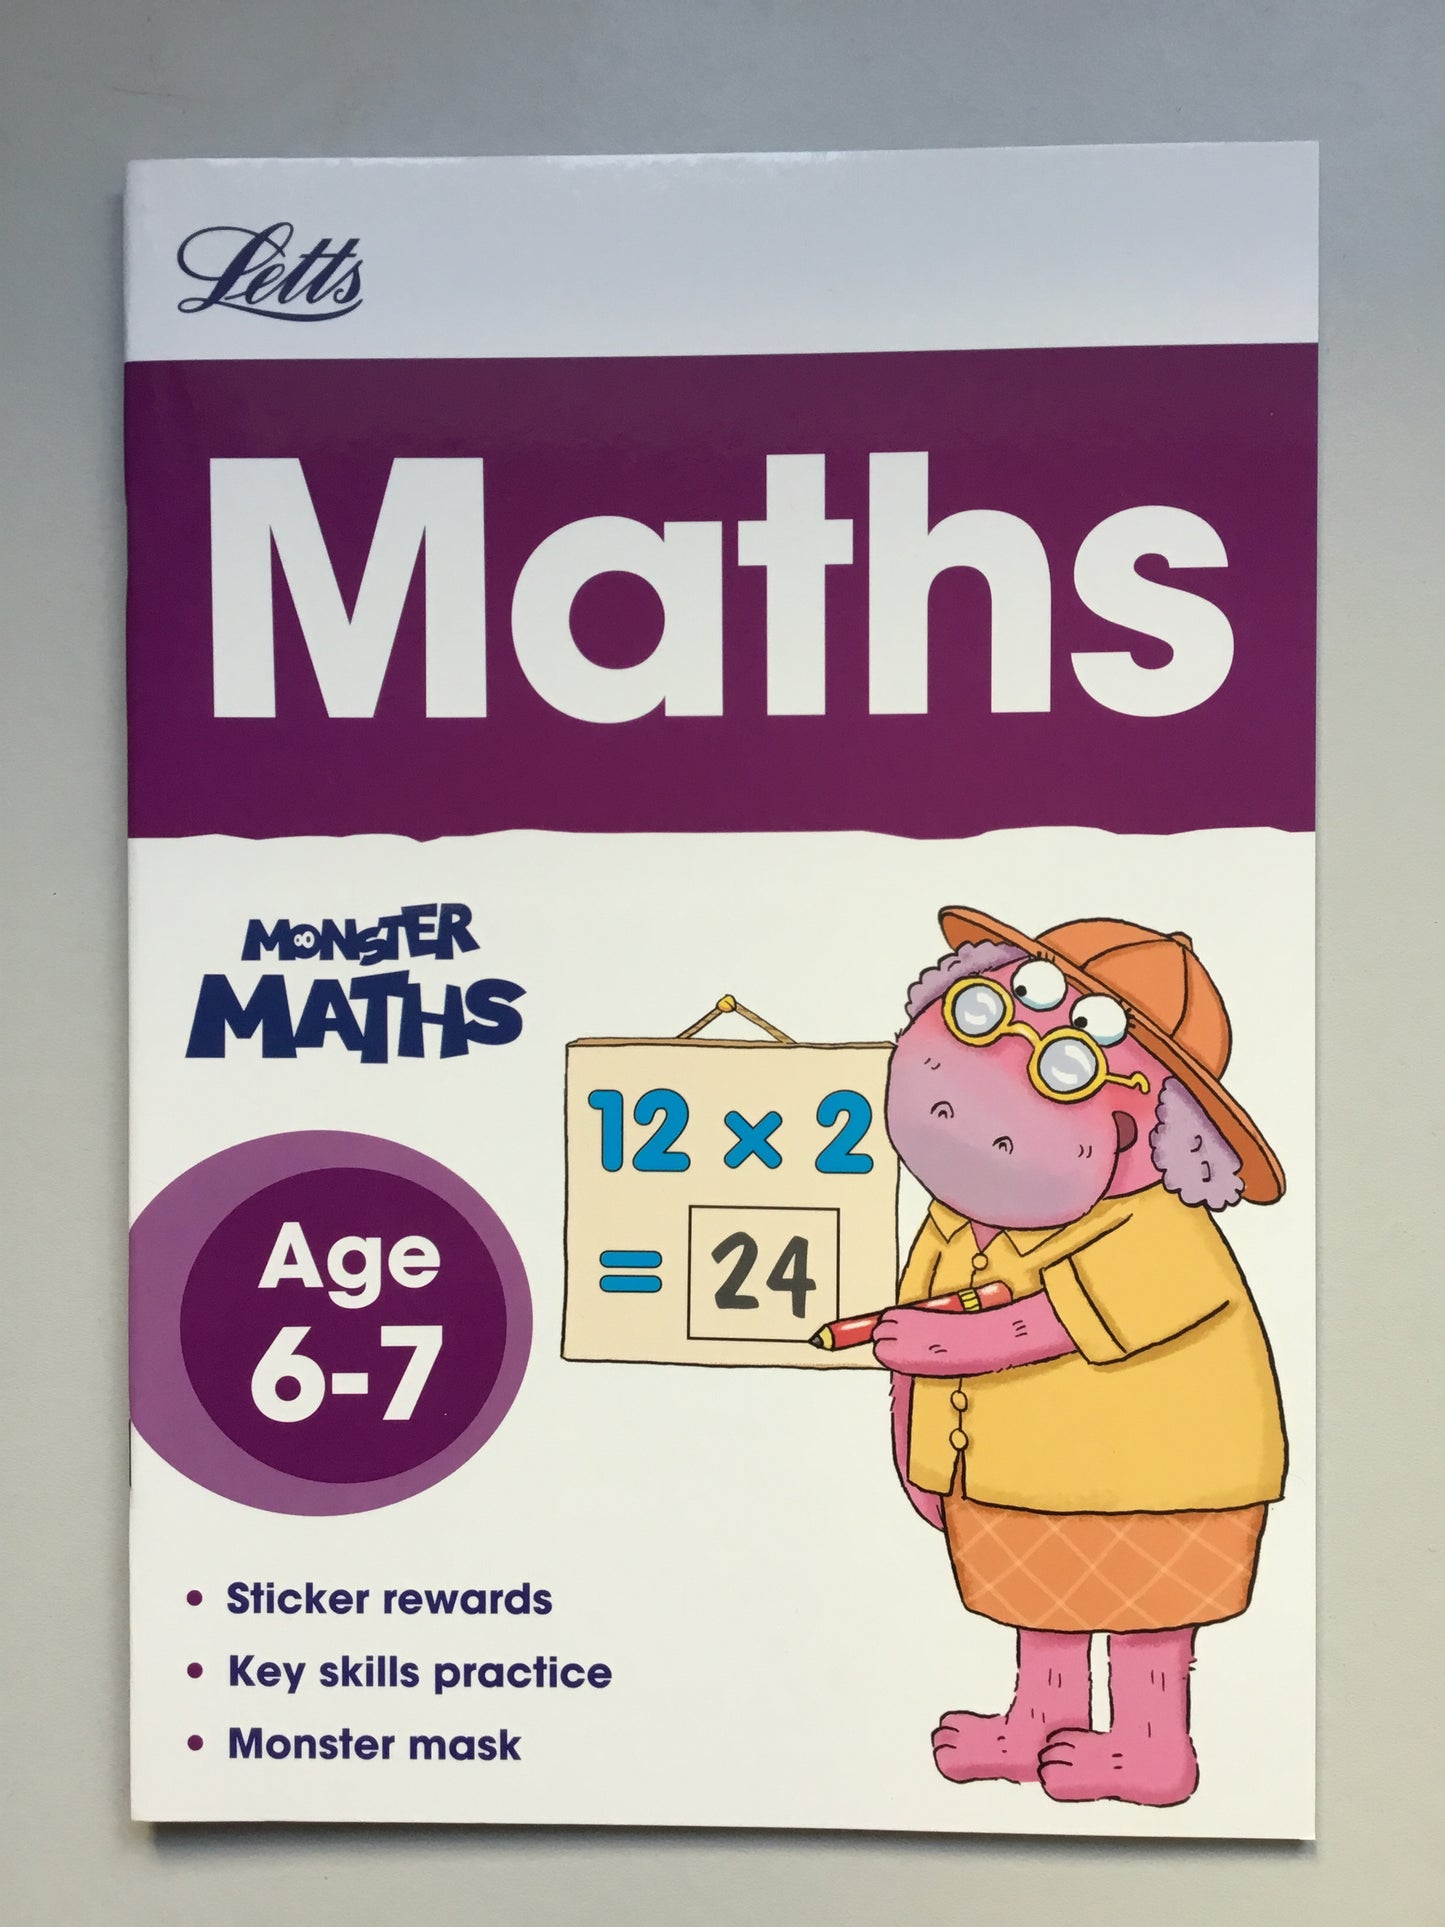 Letts Monster Maths - Maths Age 6-7